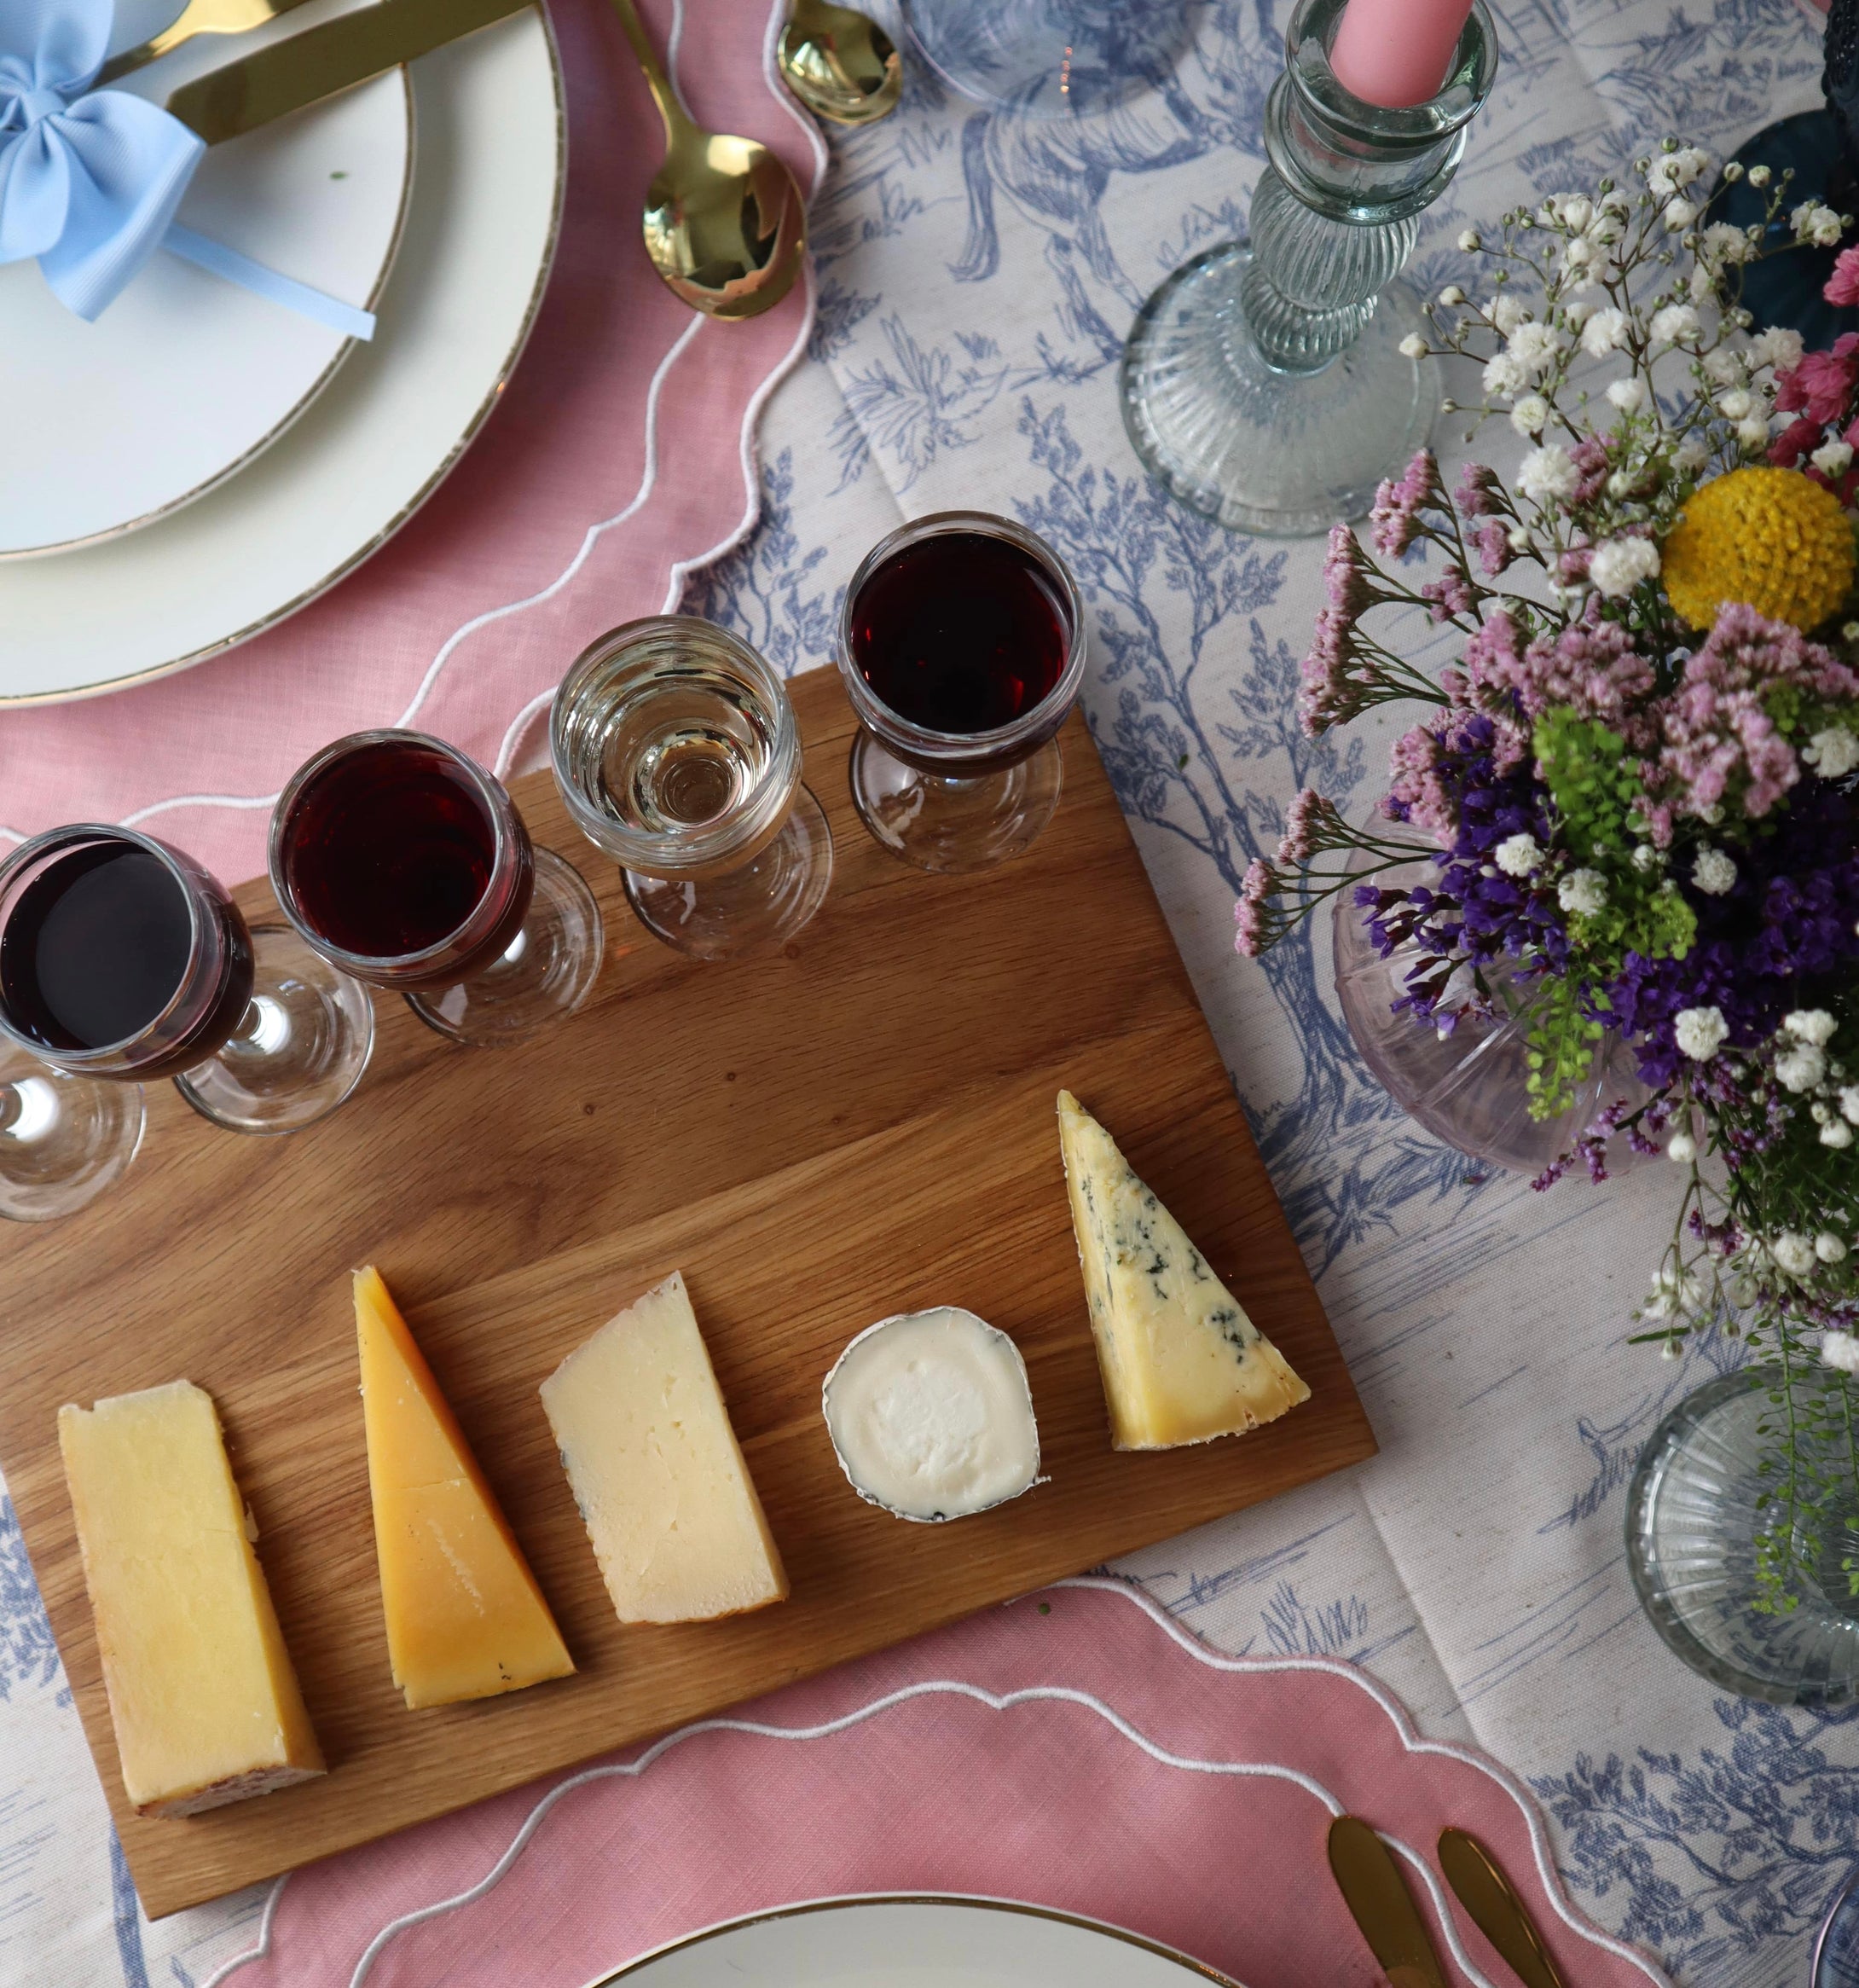 The Cheese & Wine Tasting Board